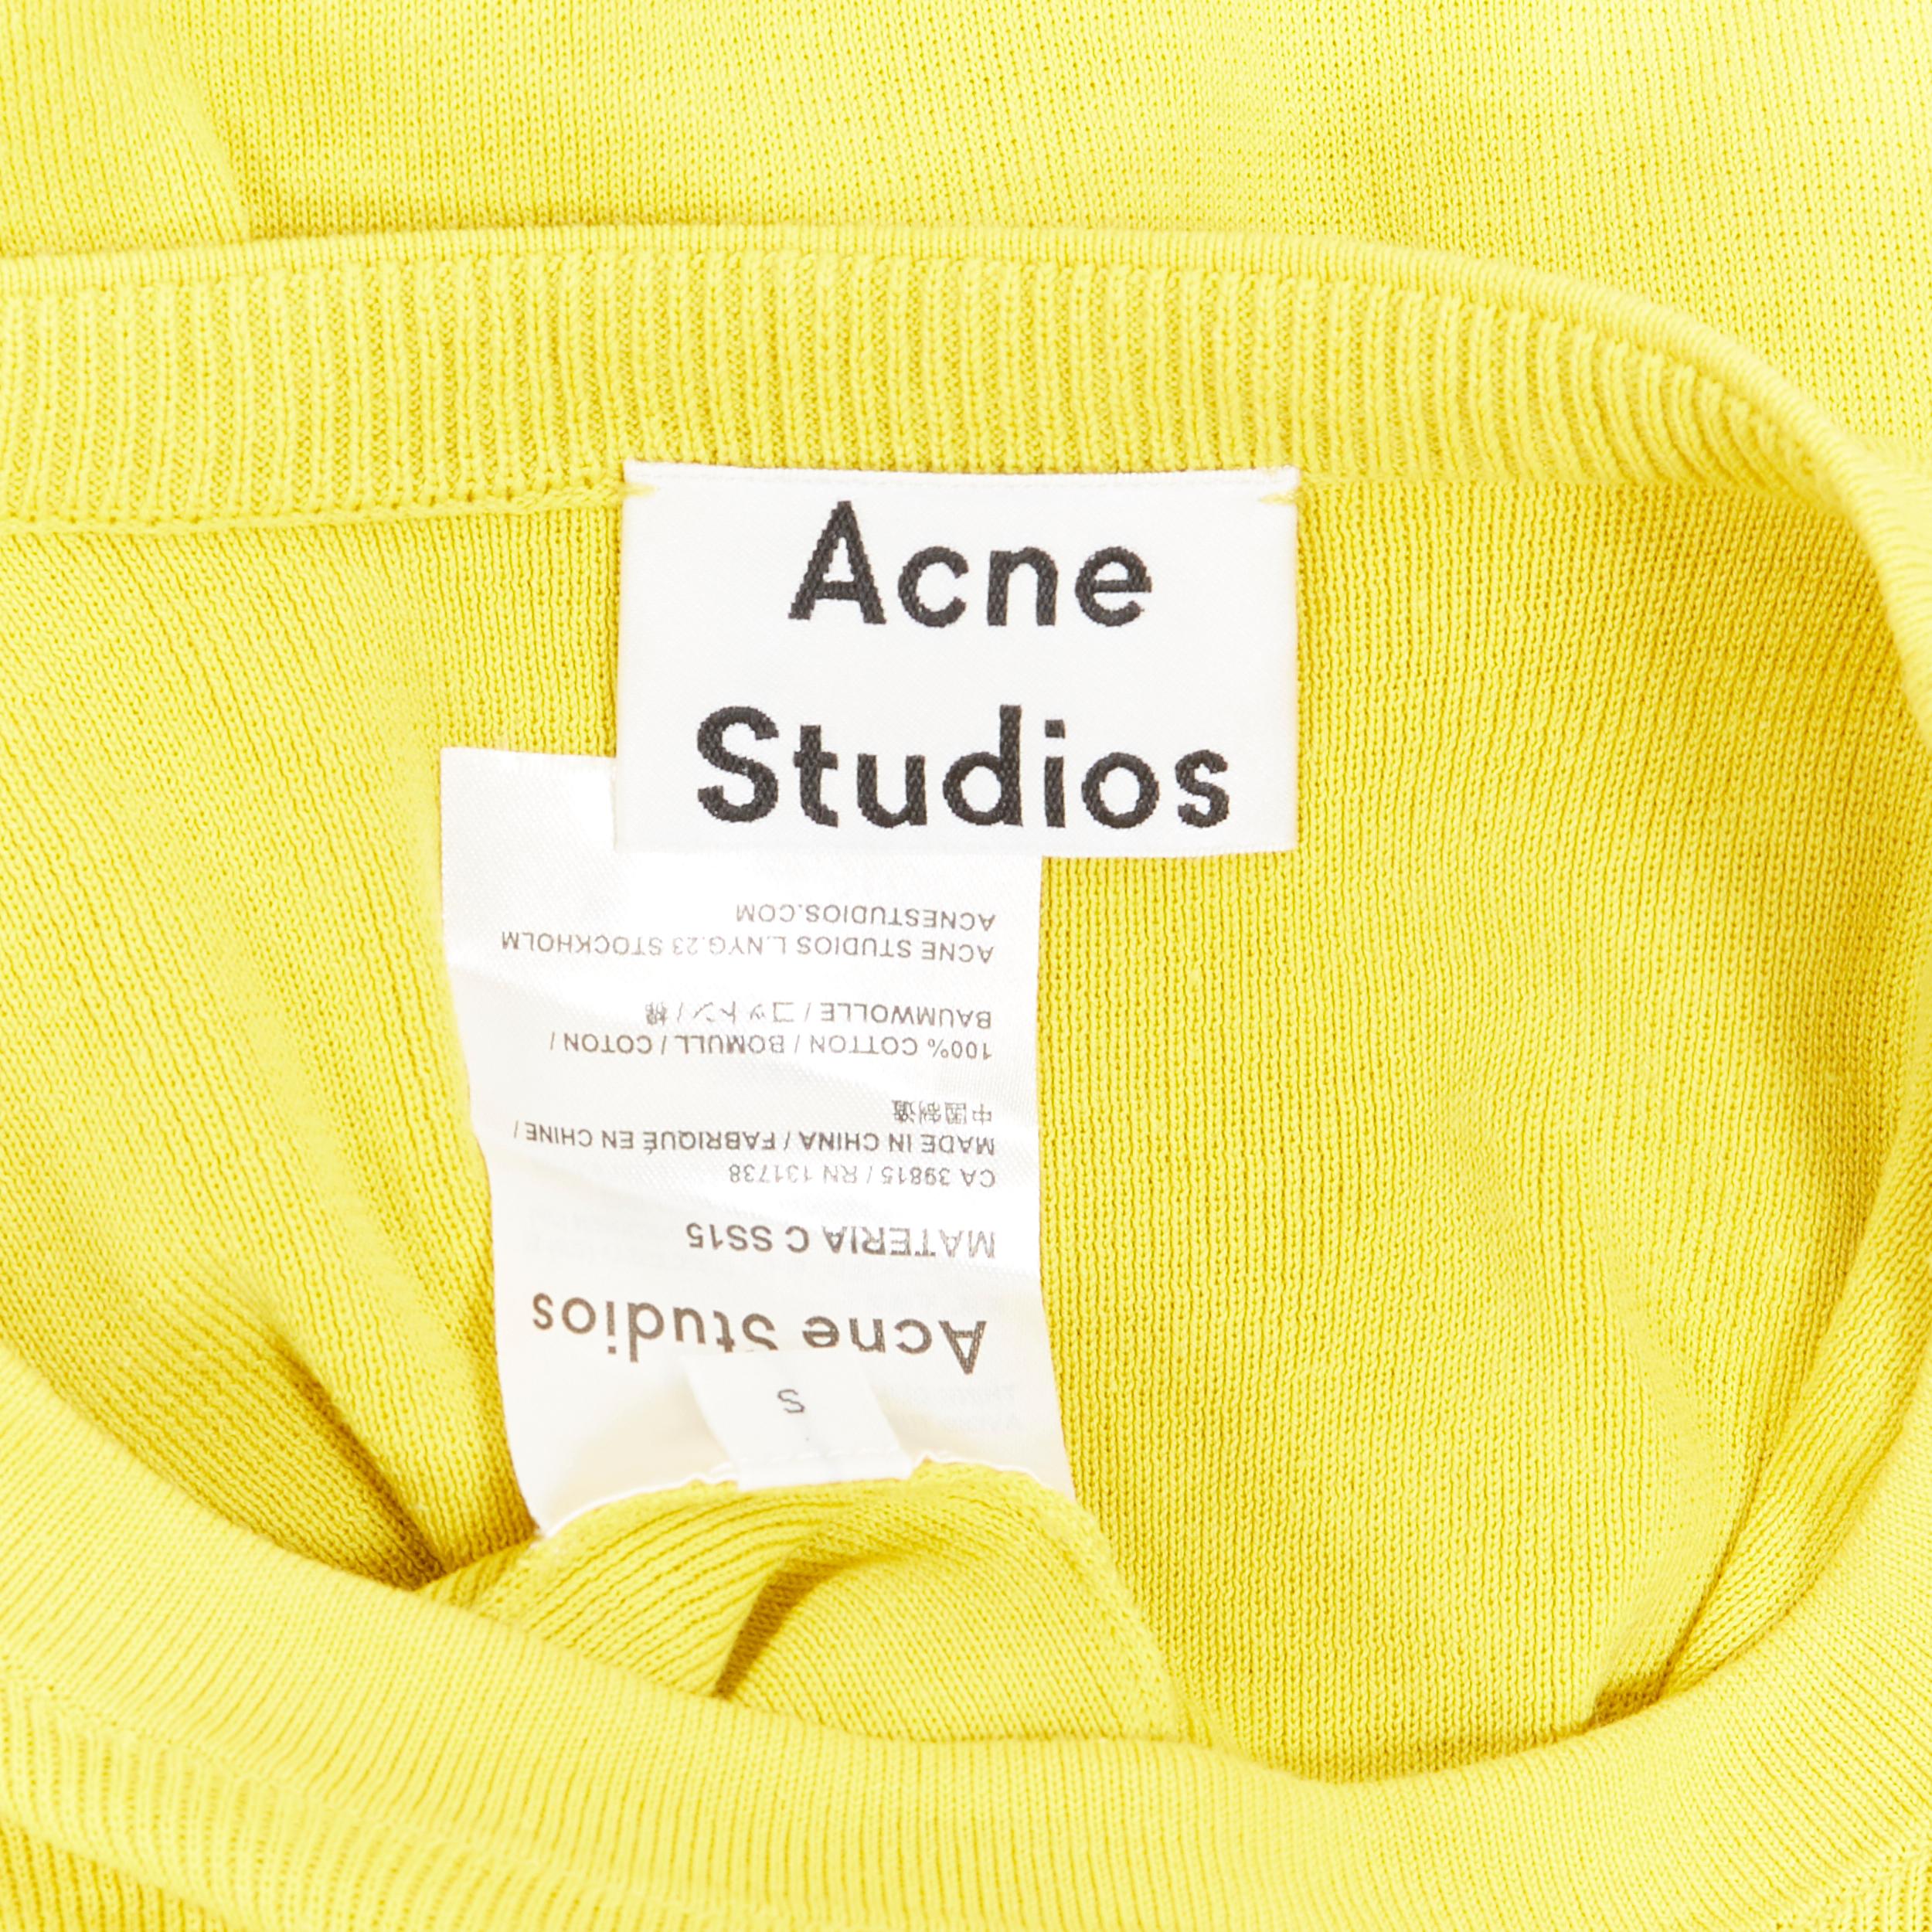 ACNE STUDIOS Materia SS15 100% cotton split back sweater top S 2